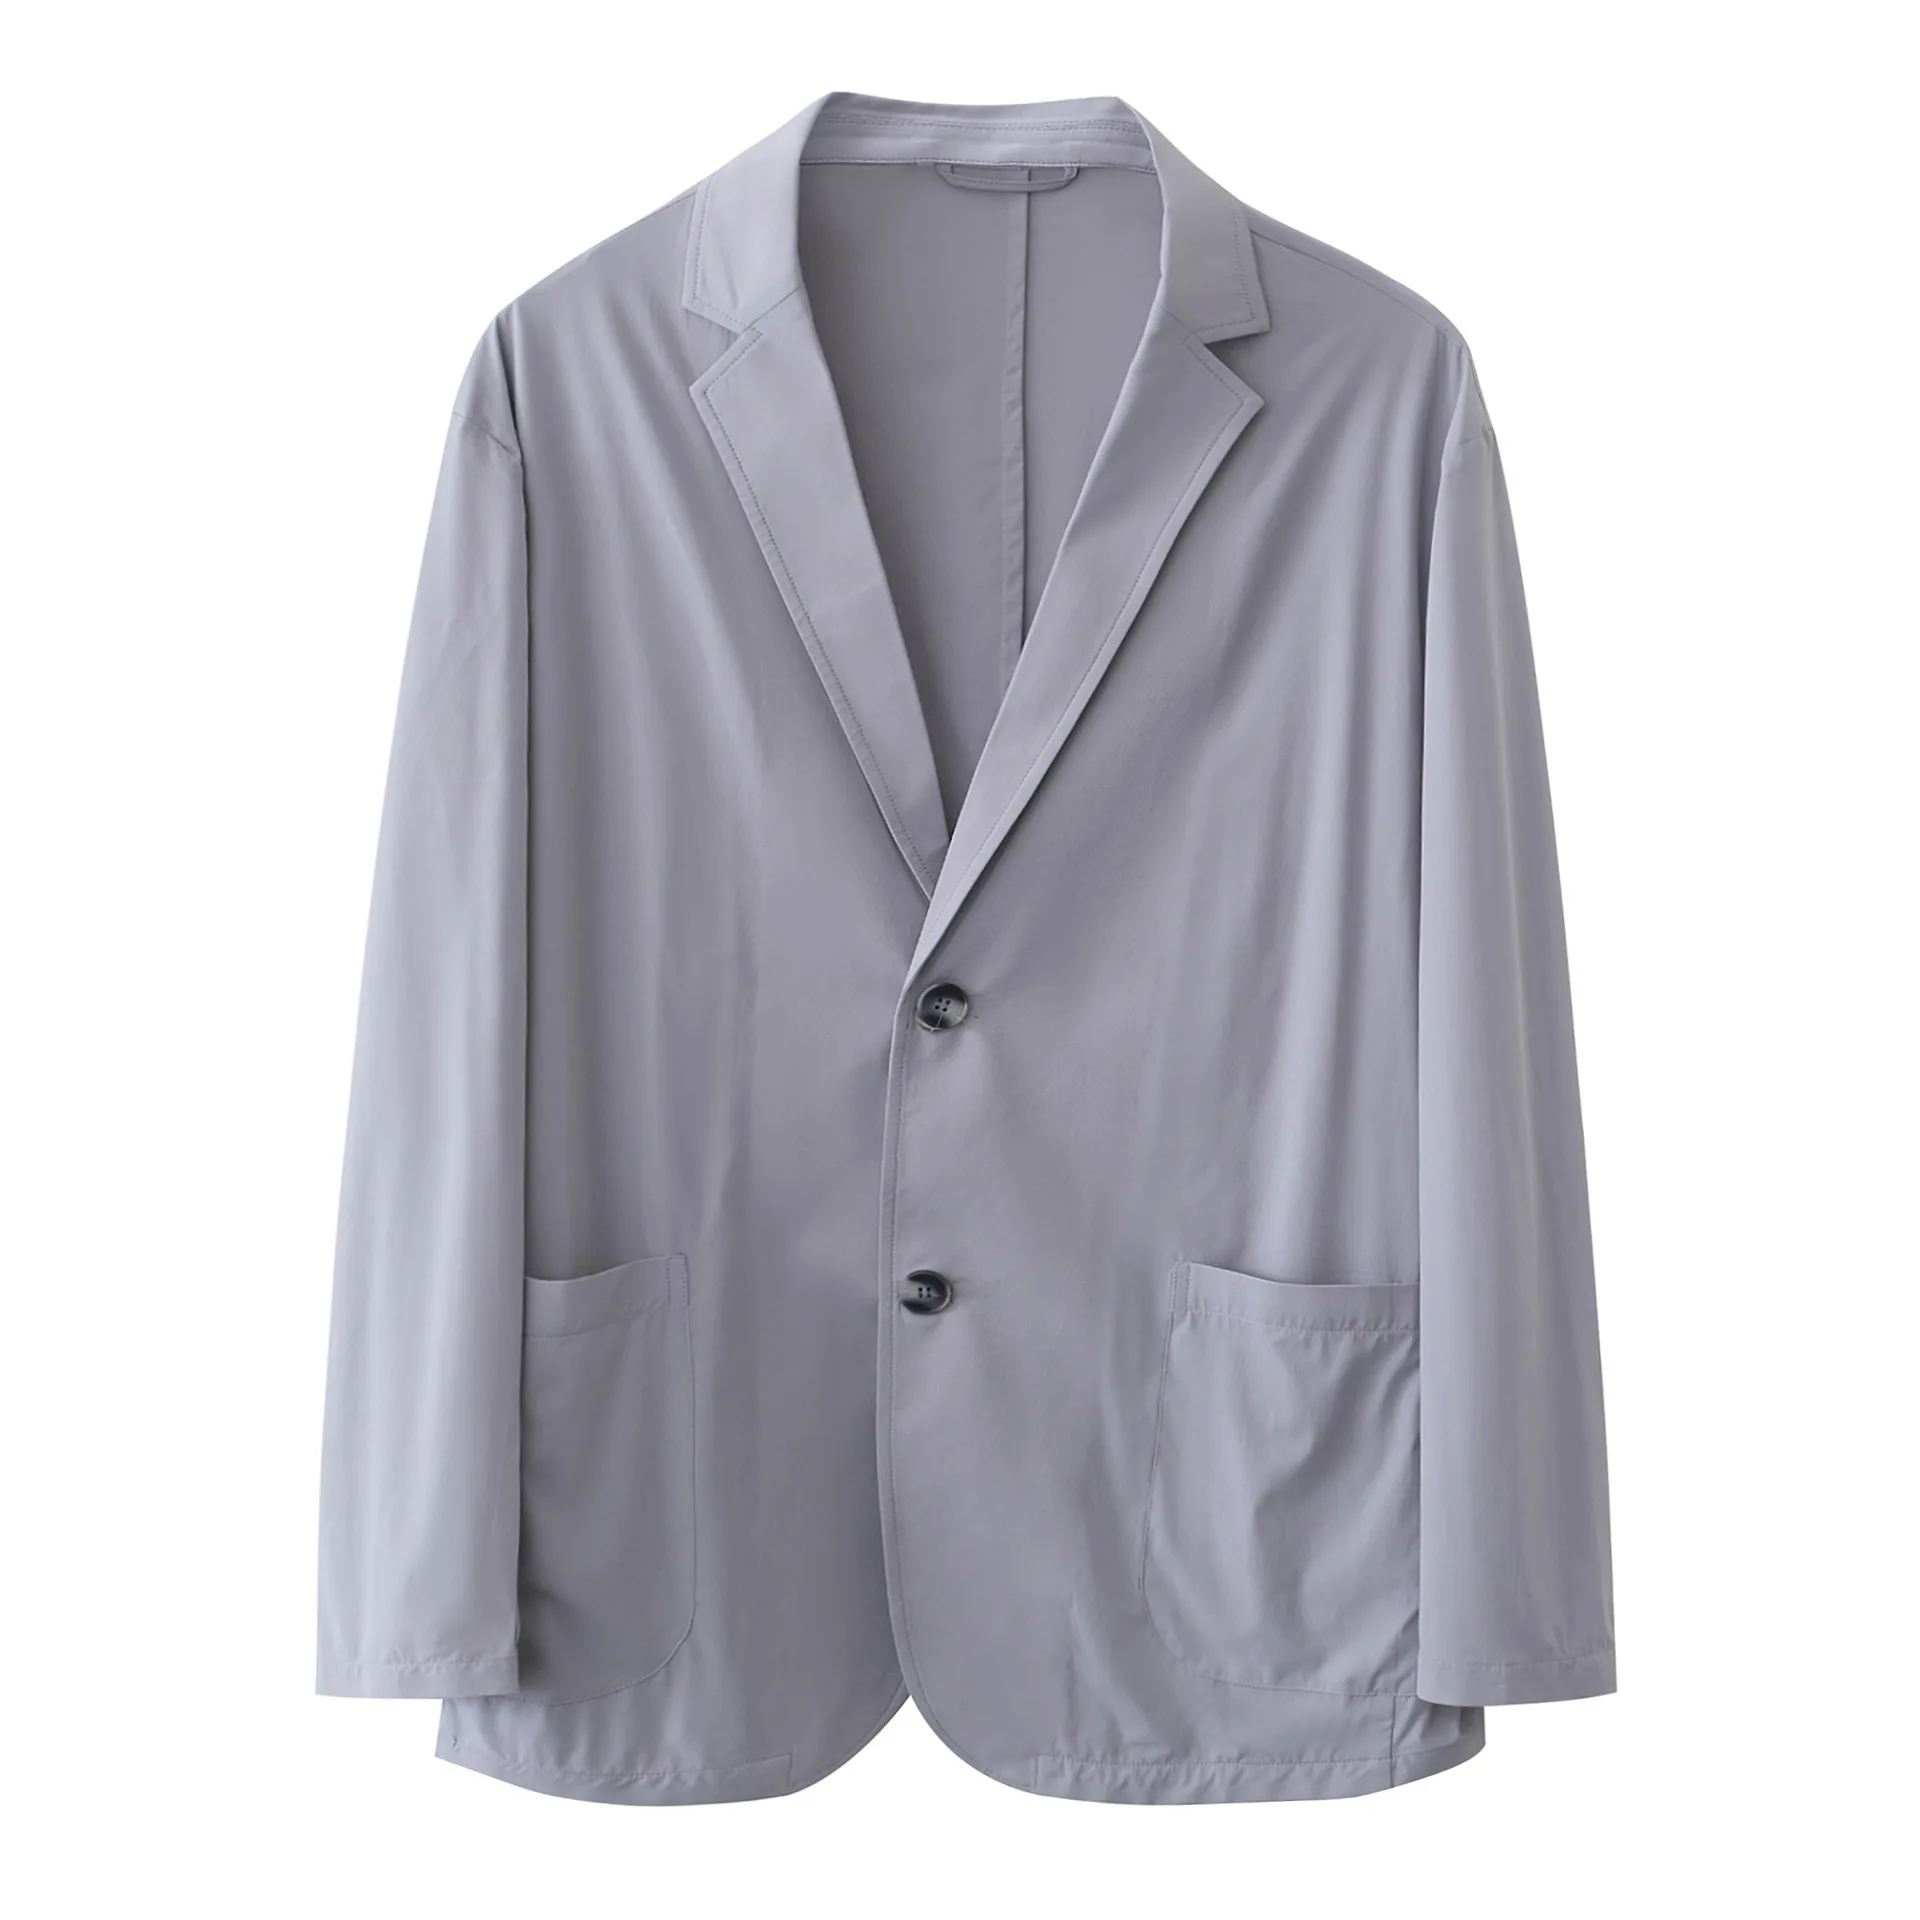 

2537-R-Double-breasted suit gentleman business suit professional suit